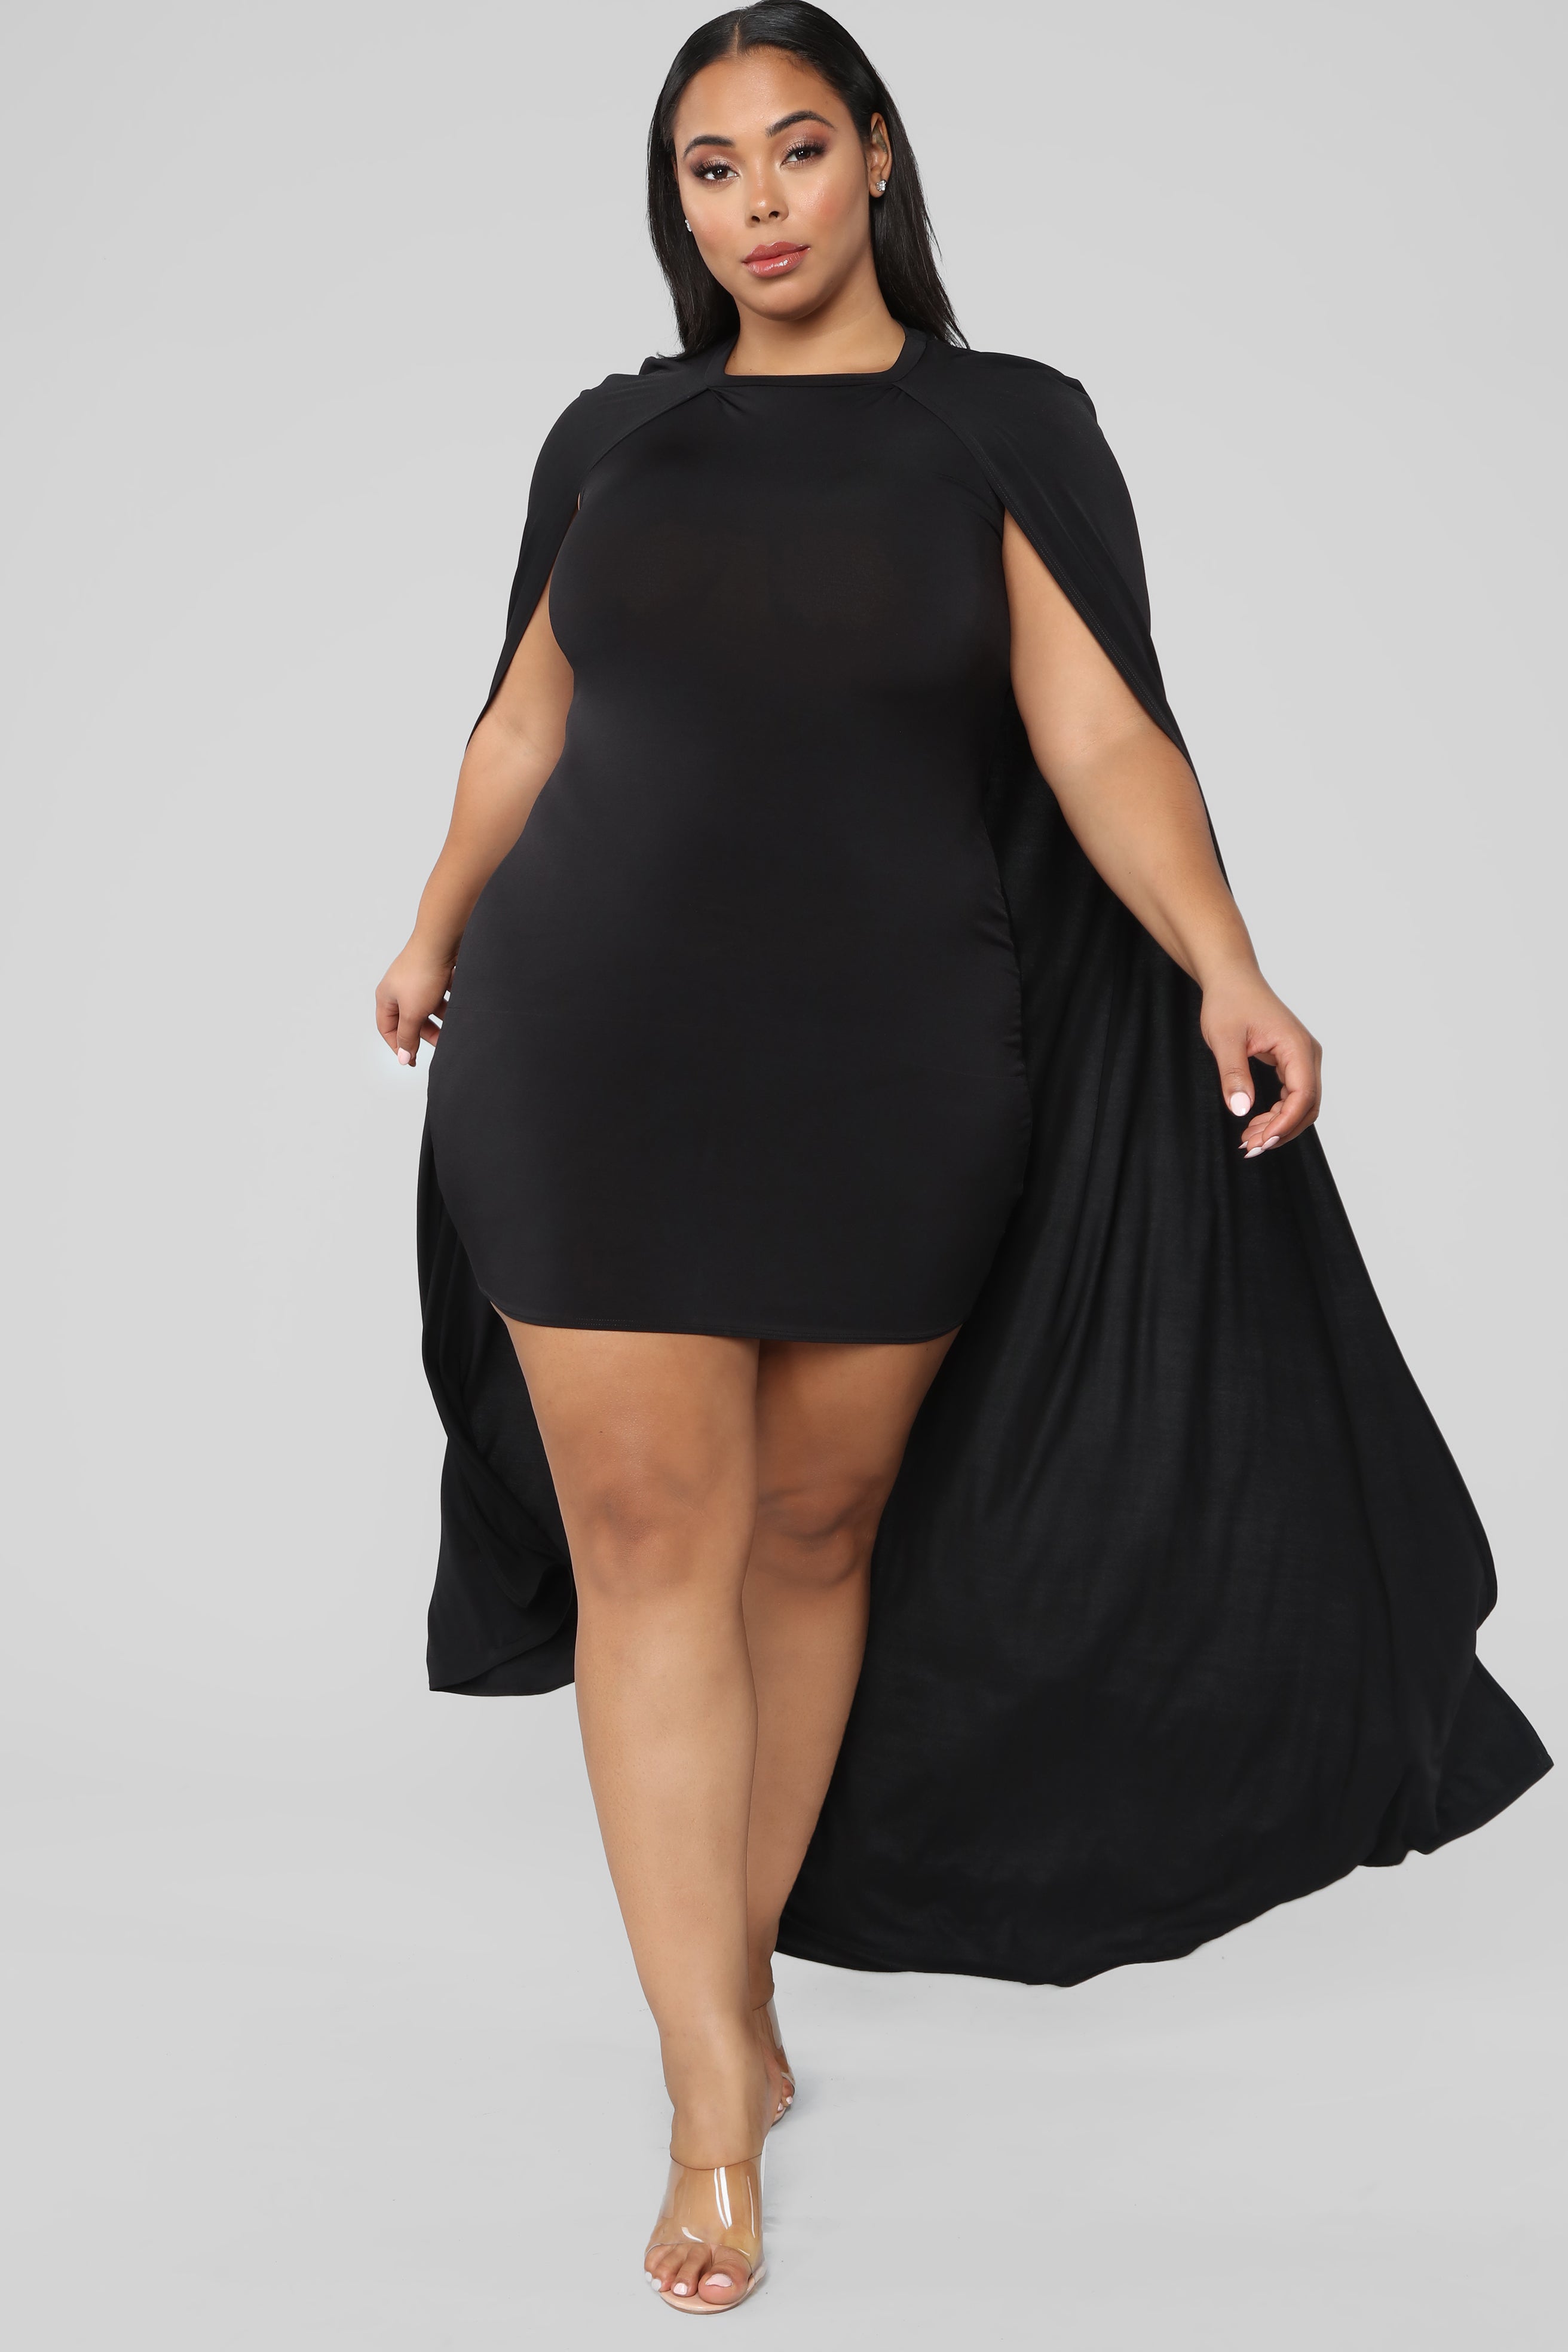 Diva Dress - Black | Fashion | Fashion Nova